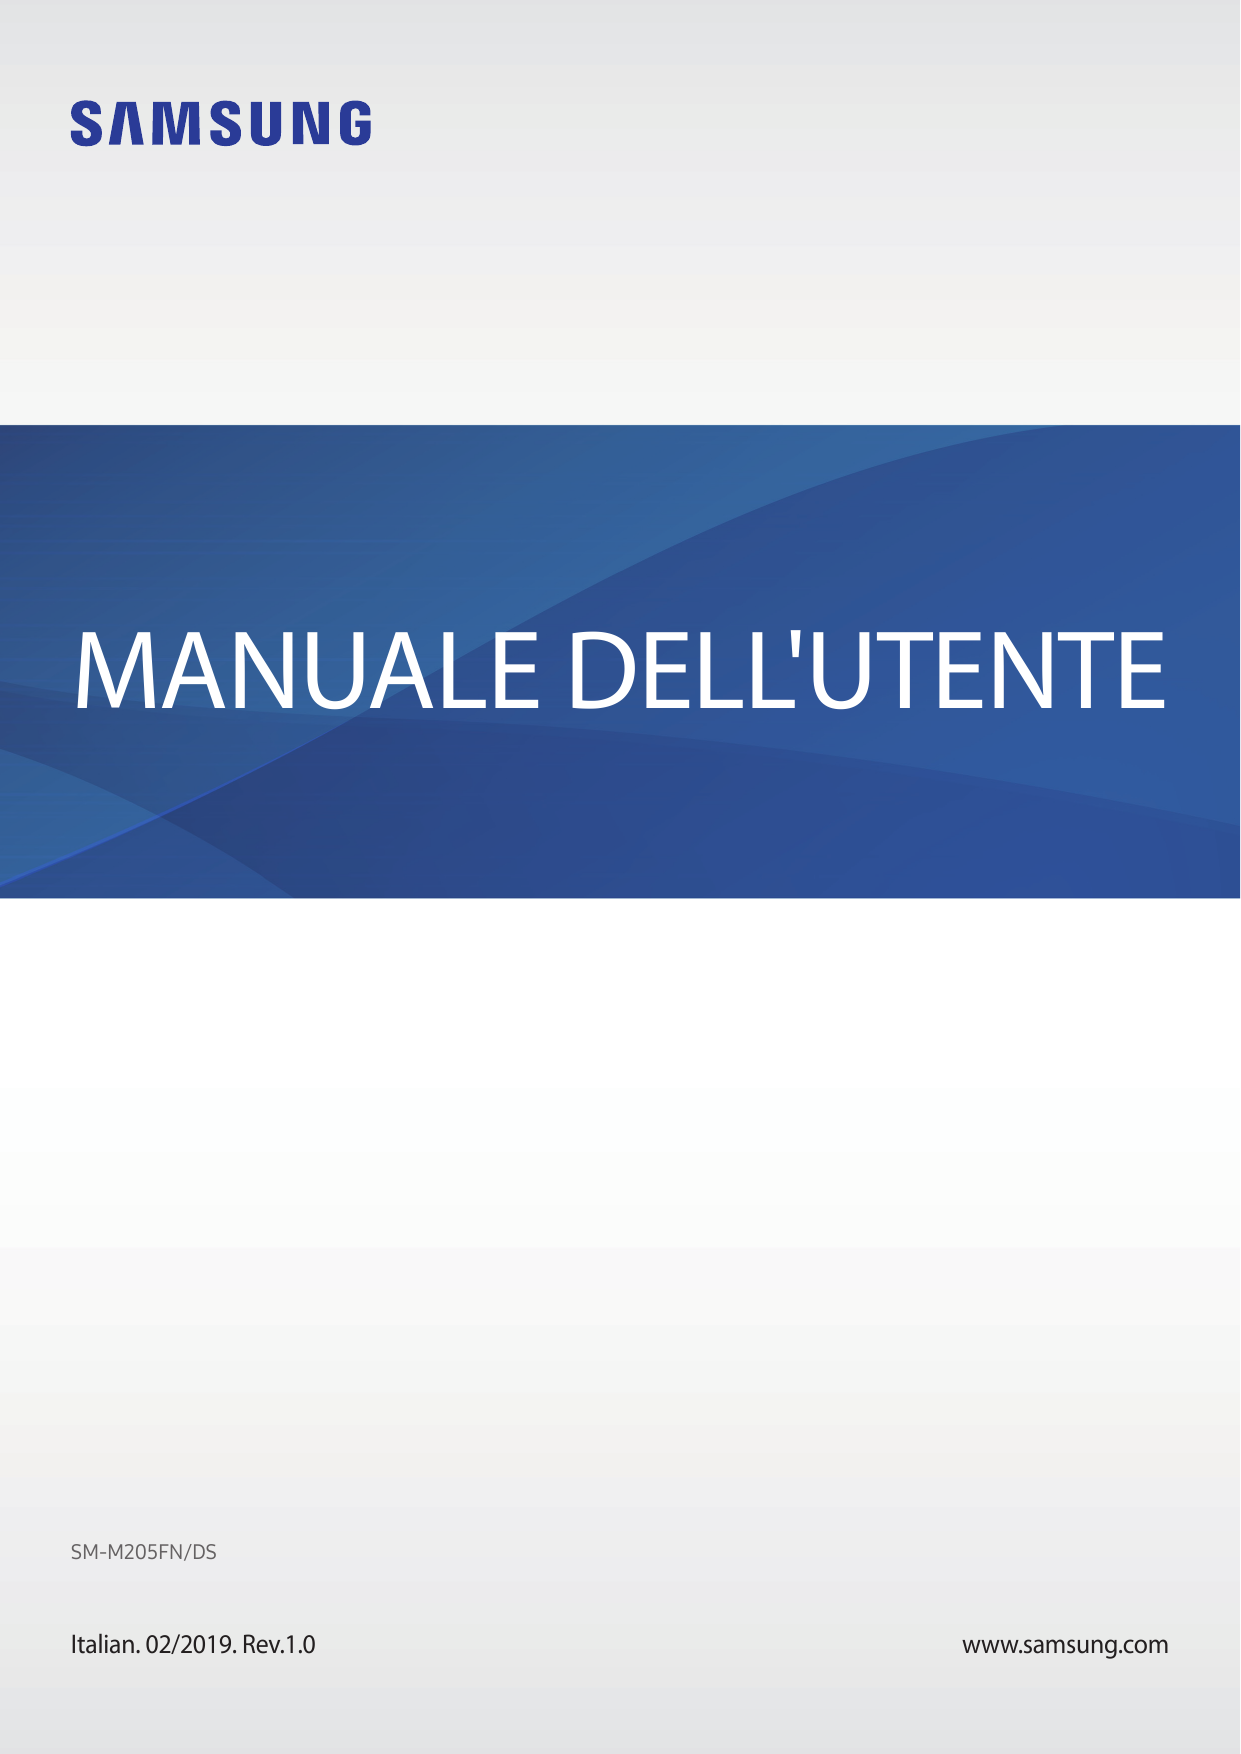 MANUALE DELL'UTENTESM-M205FN/DSItalian. 02/2019. Rev.1.0www.samsung.com